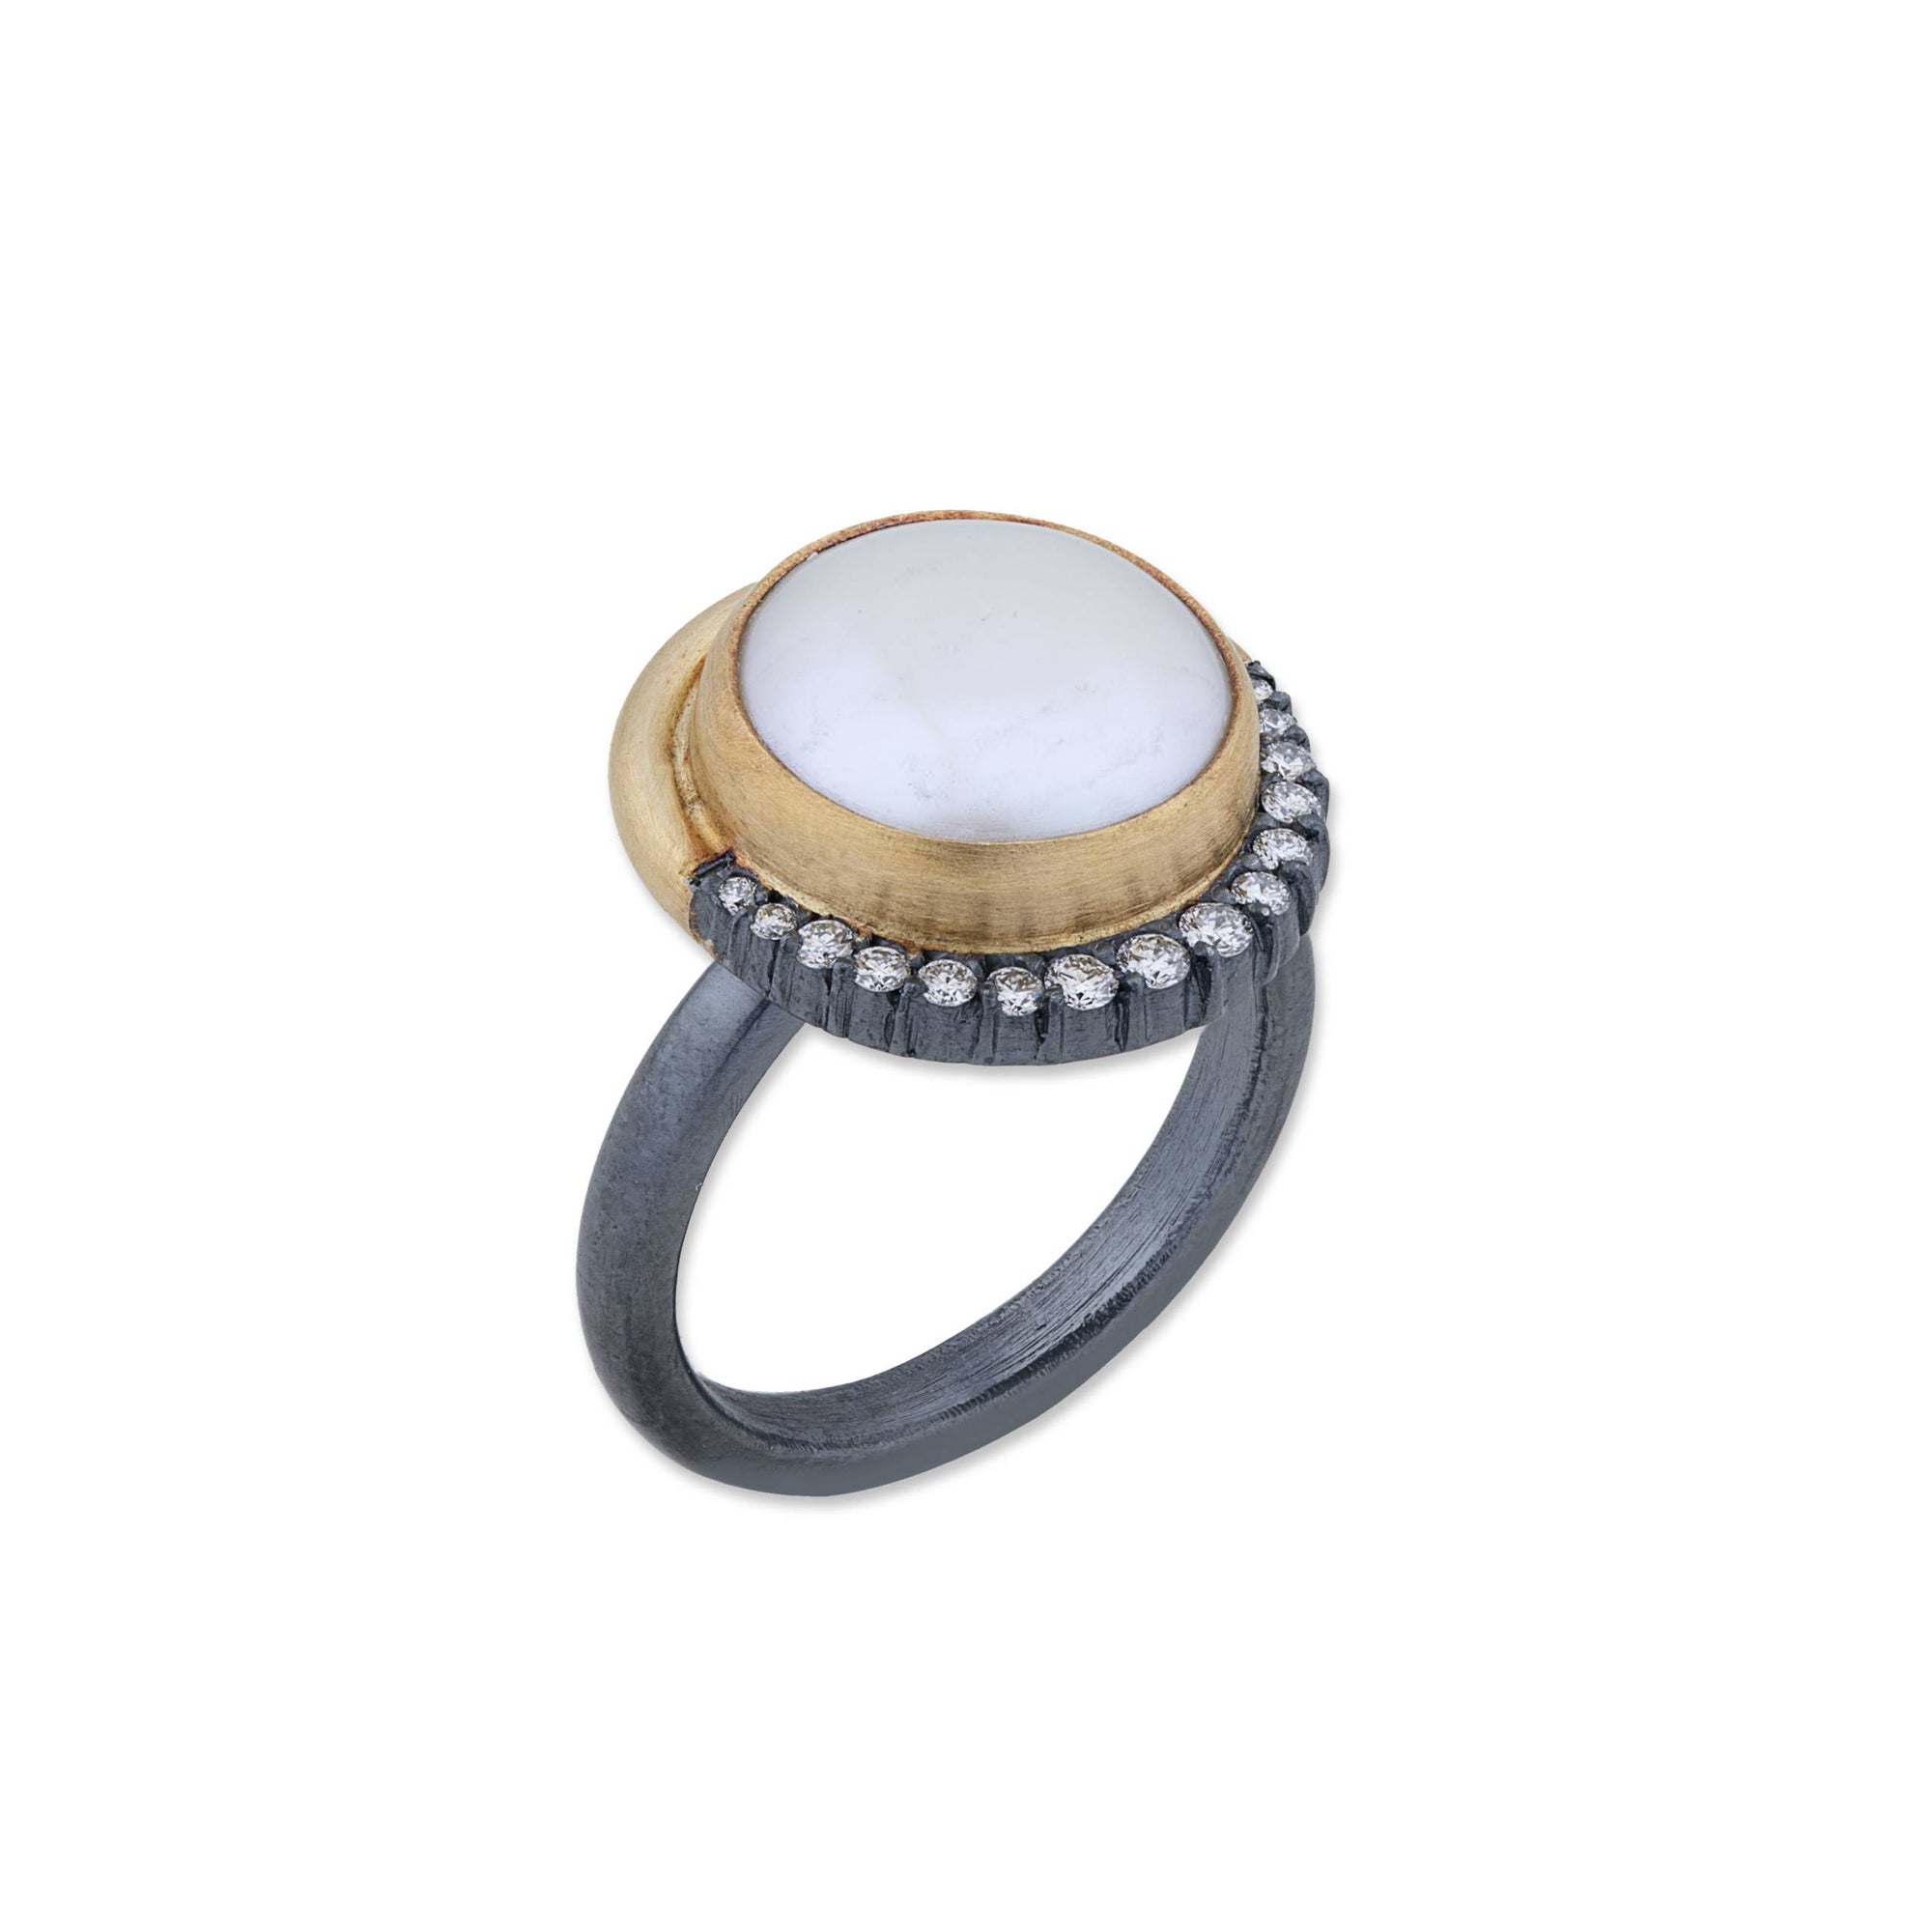 Lika Behar 22K Gold & Oxidized Sterling Silver “Luna” Pearl & Diamond Accent Ring